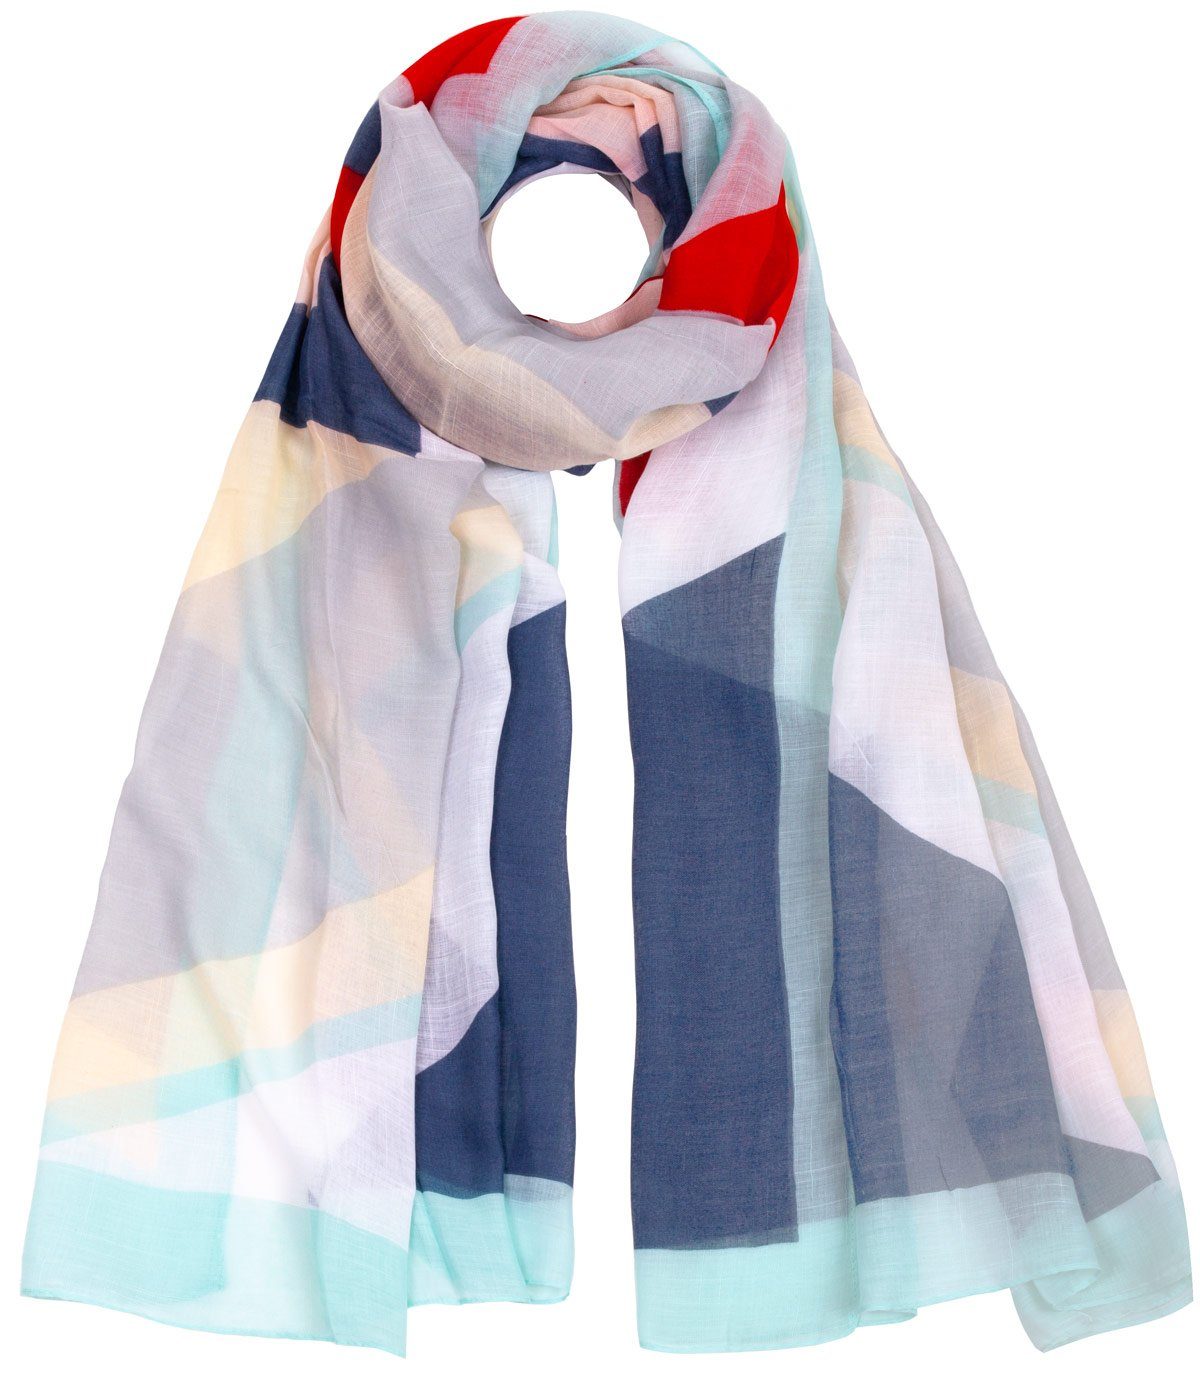 Faera Modeschal, Damen Schal geometrisch gemusterter weicher und leichter Damenschal mint